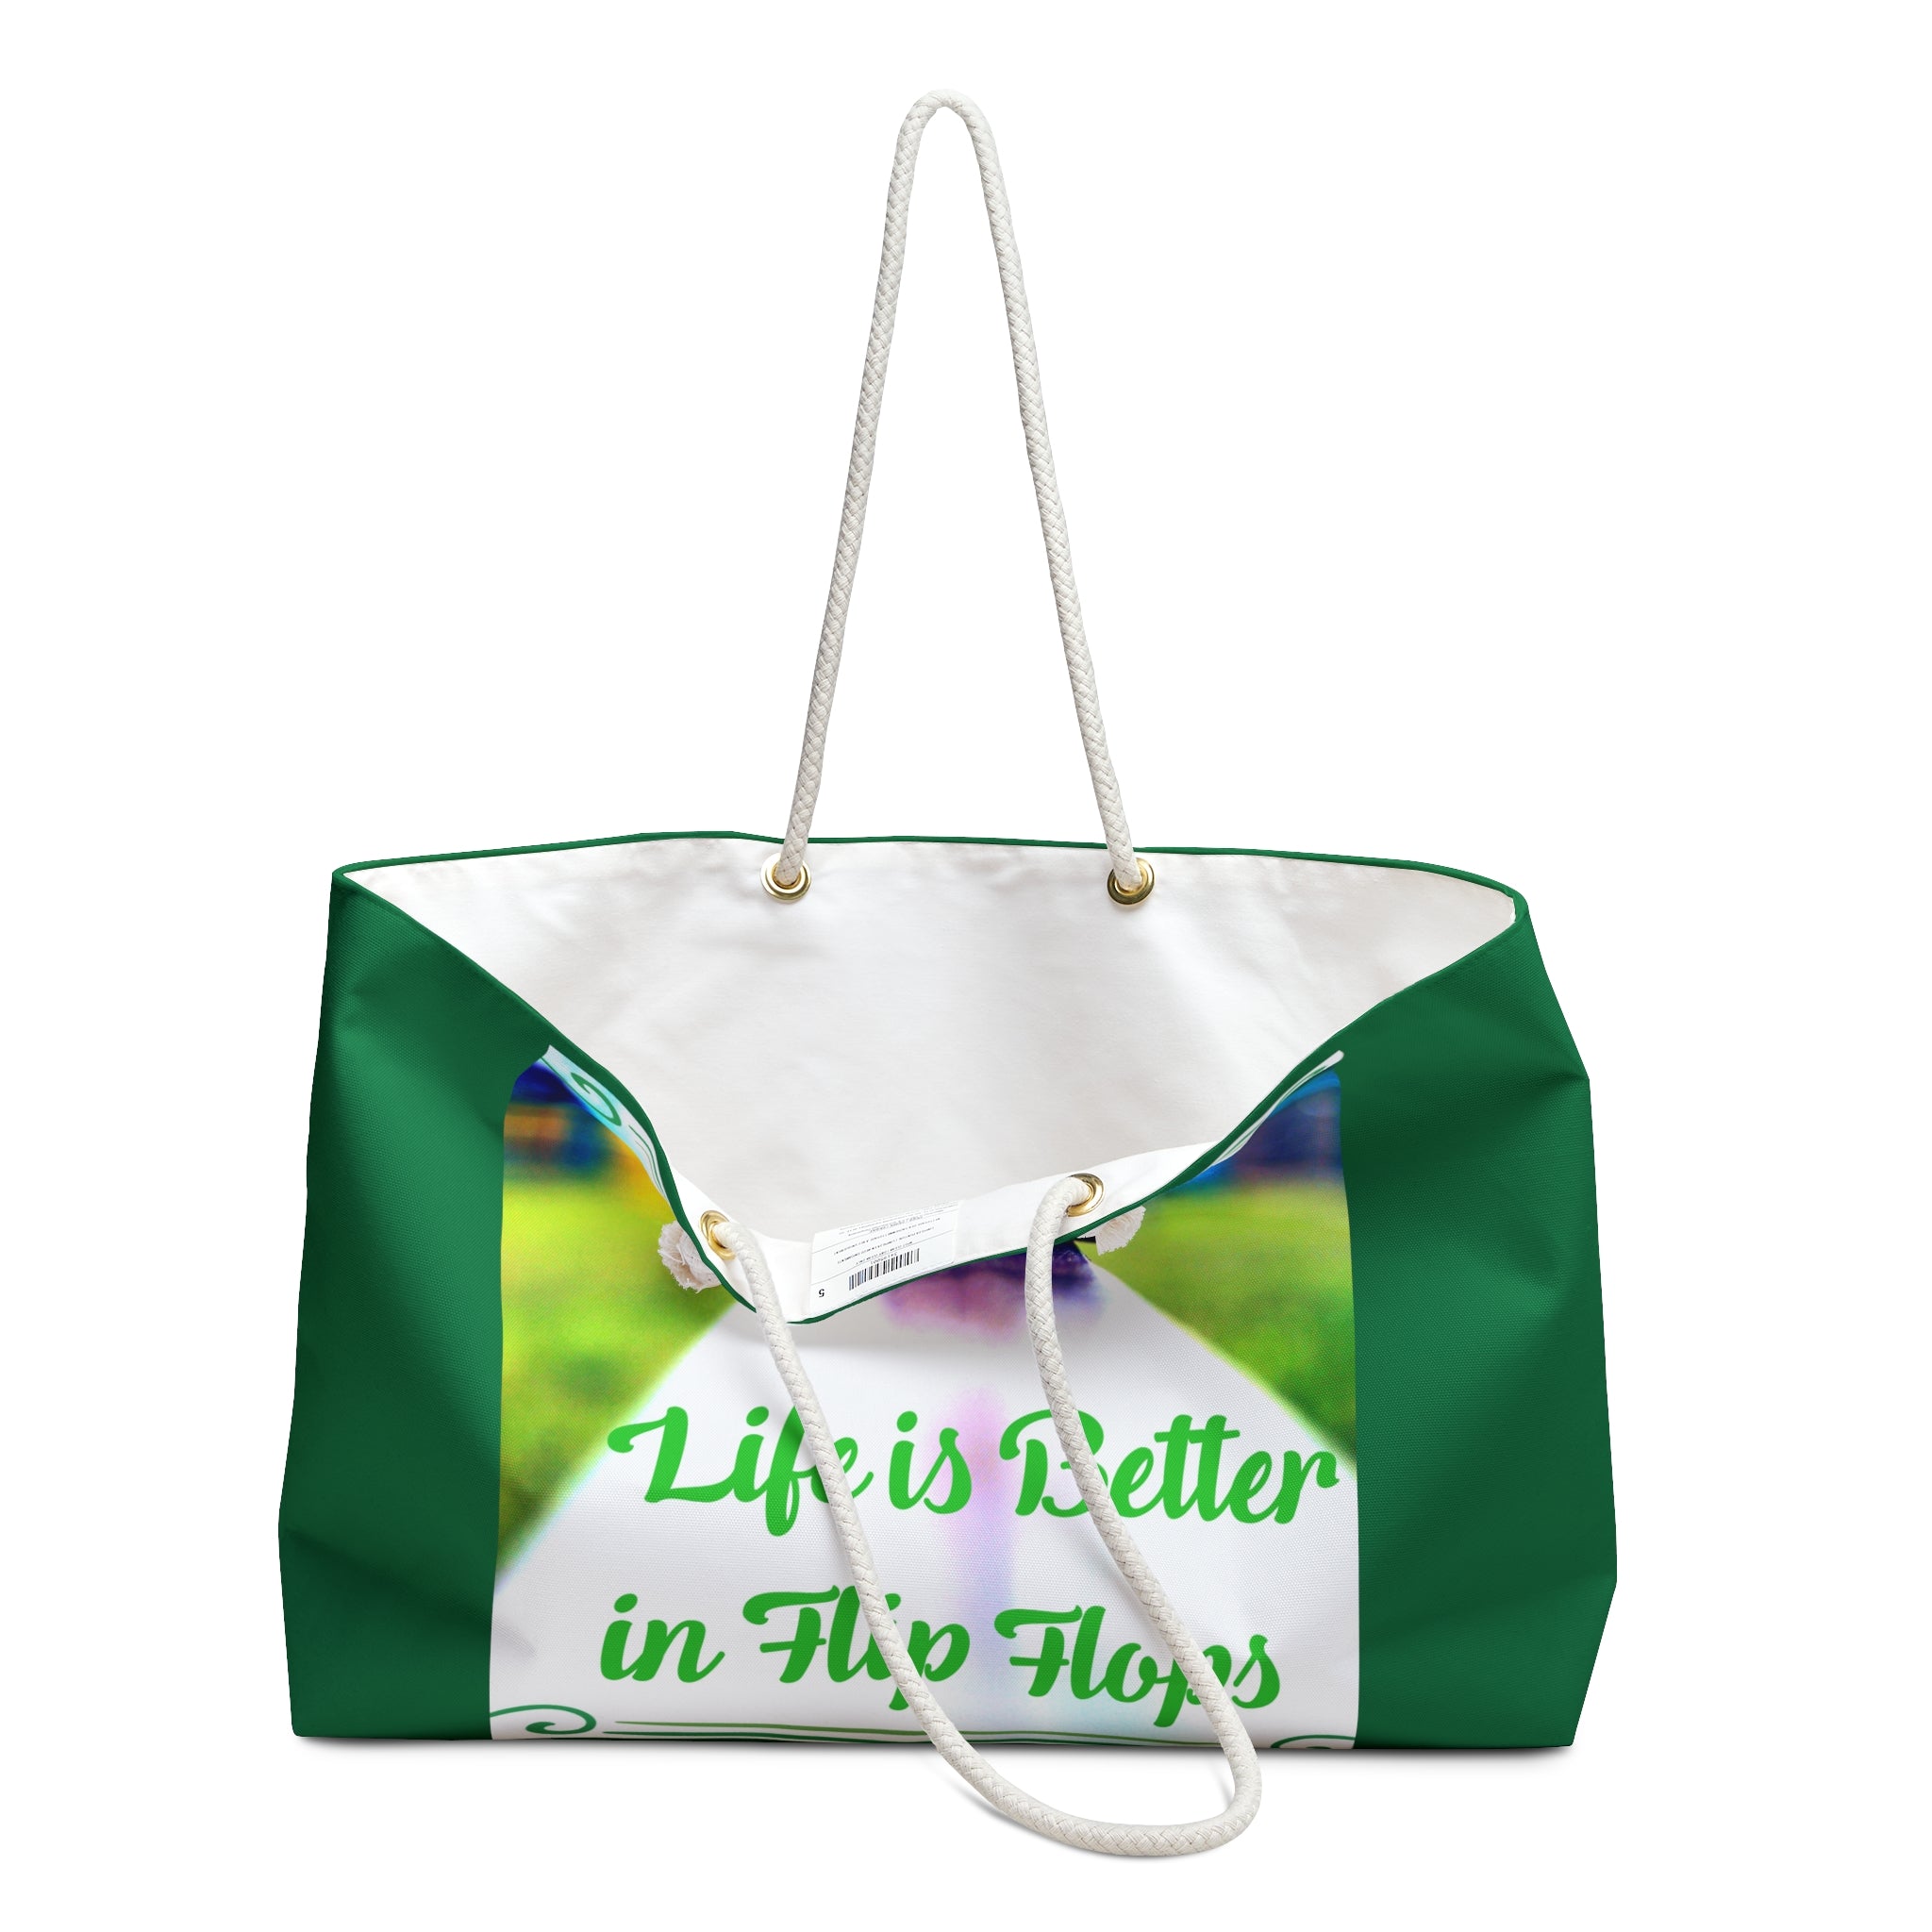 Life is Better in Flip Flops Green Weekender Bag